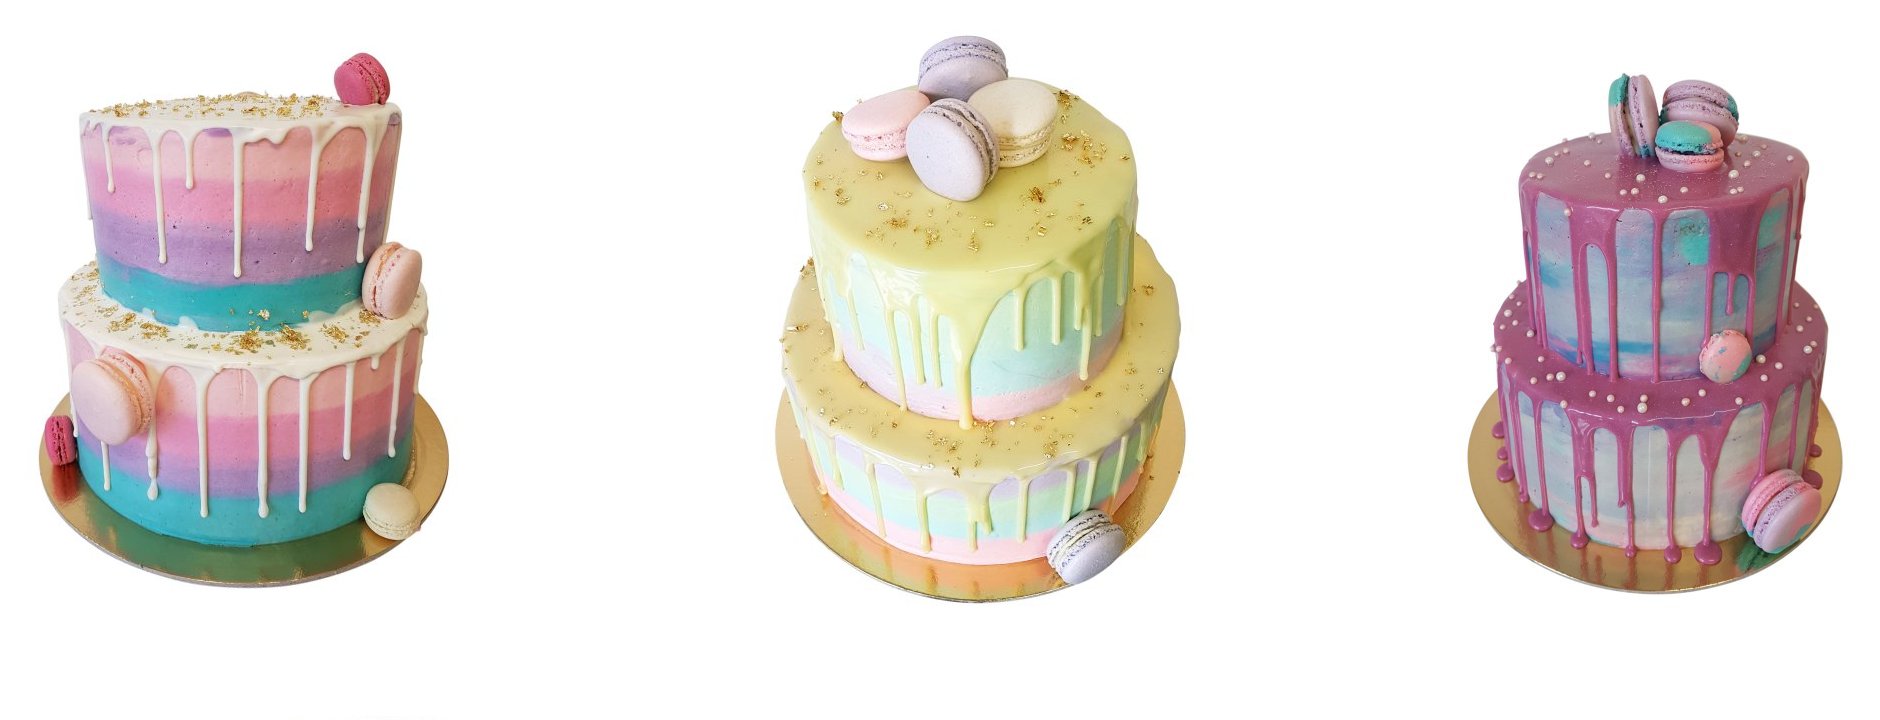 Birthday and Celebration Cakes